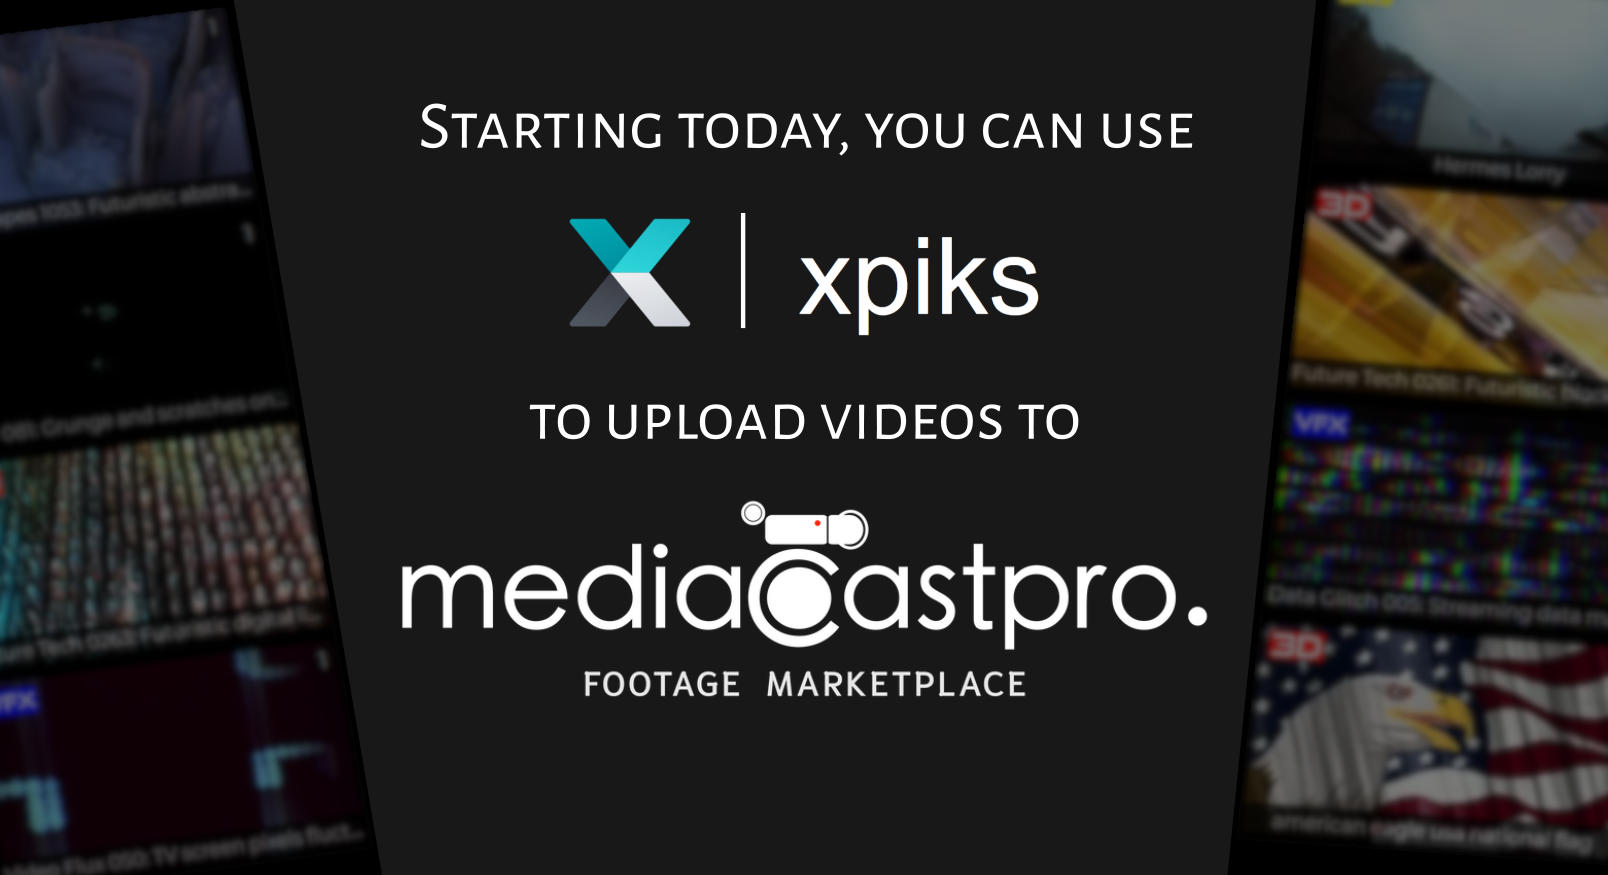 Xpiks added support for mediaCastpro